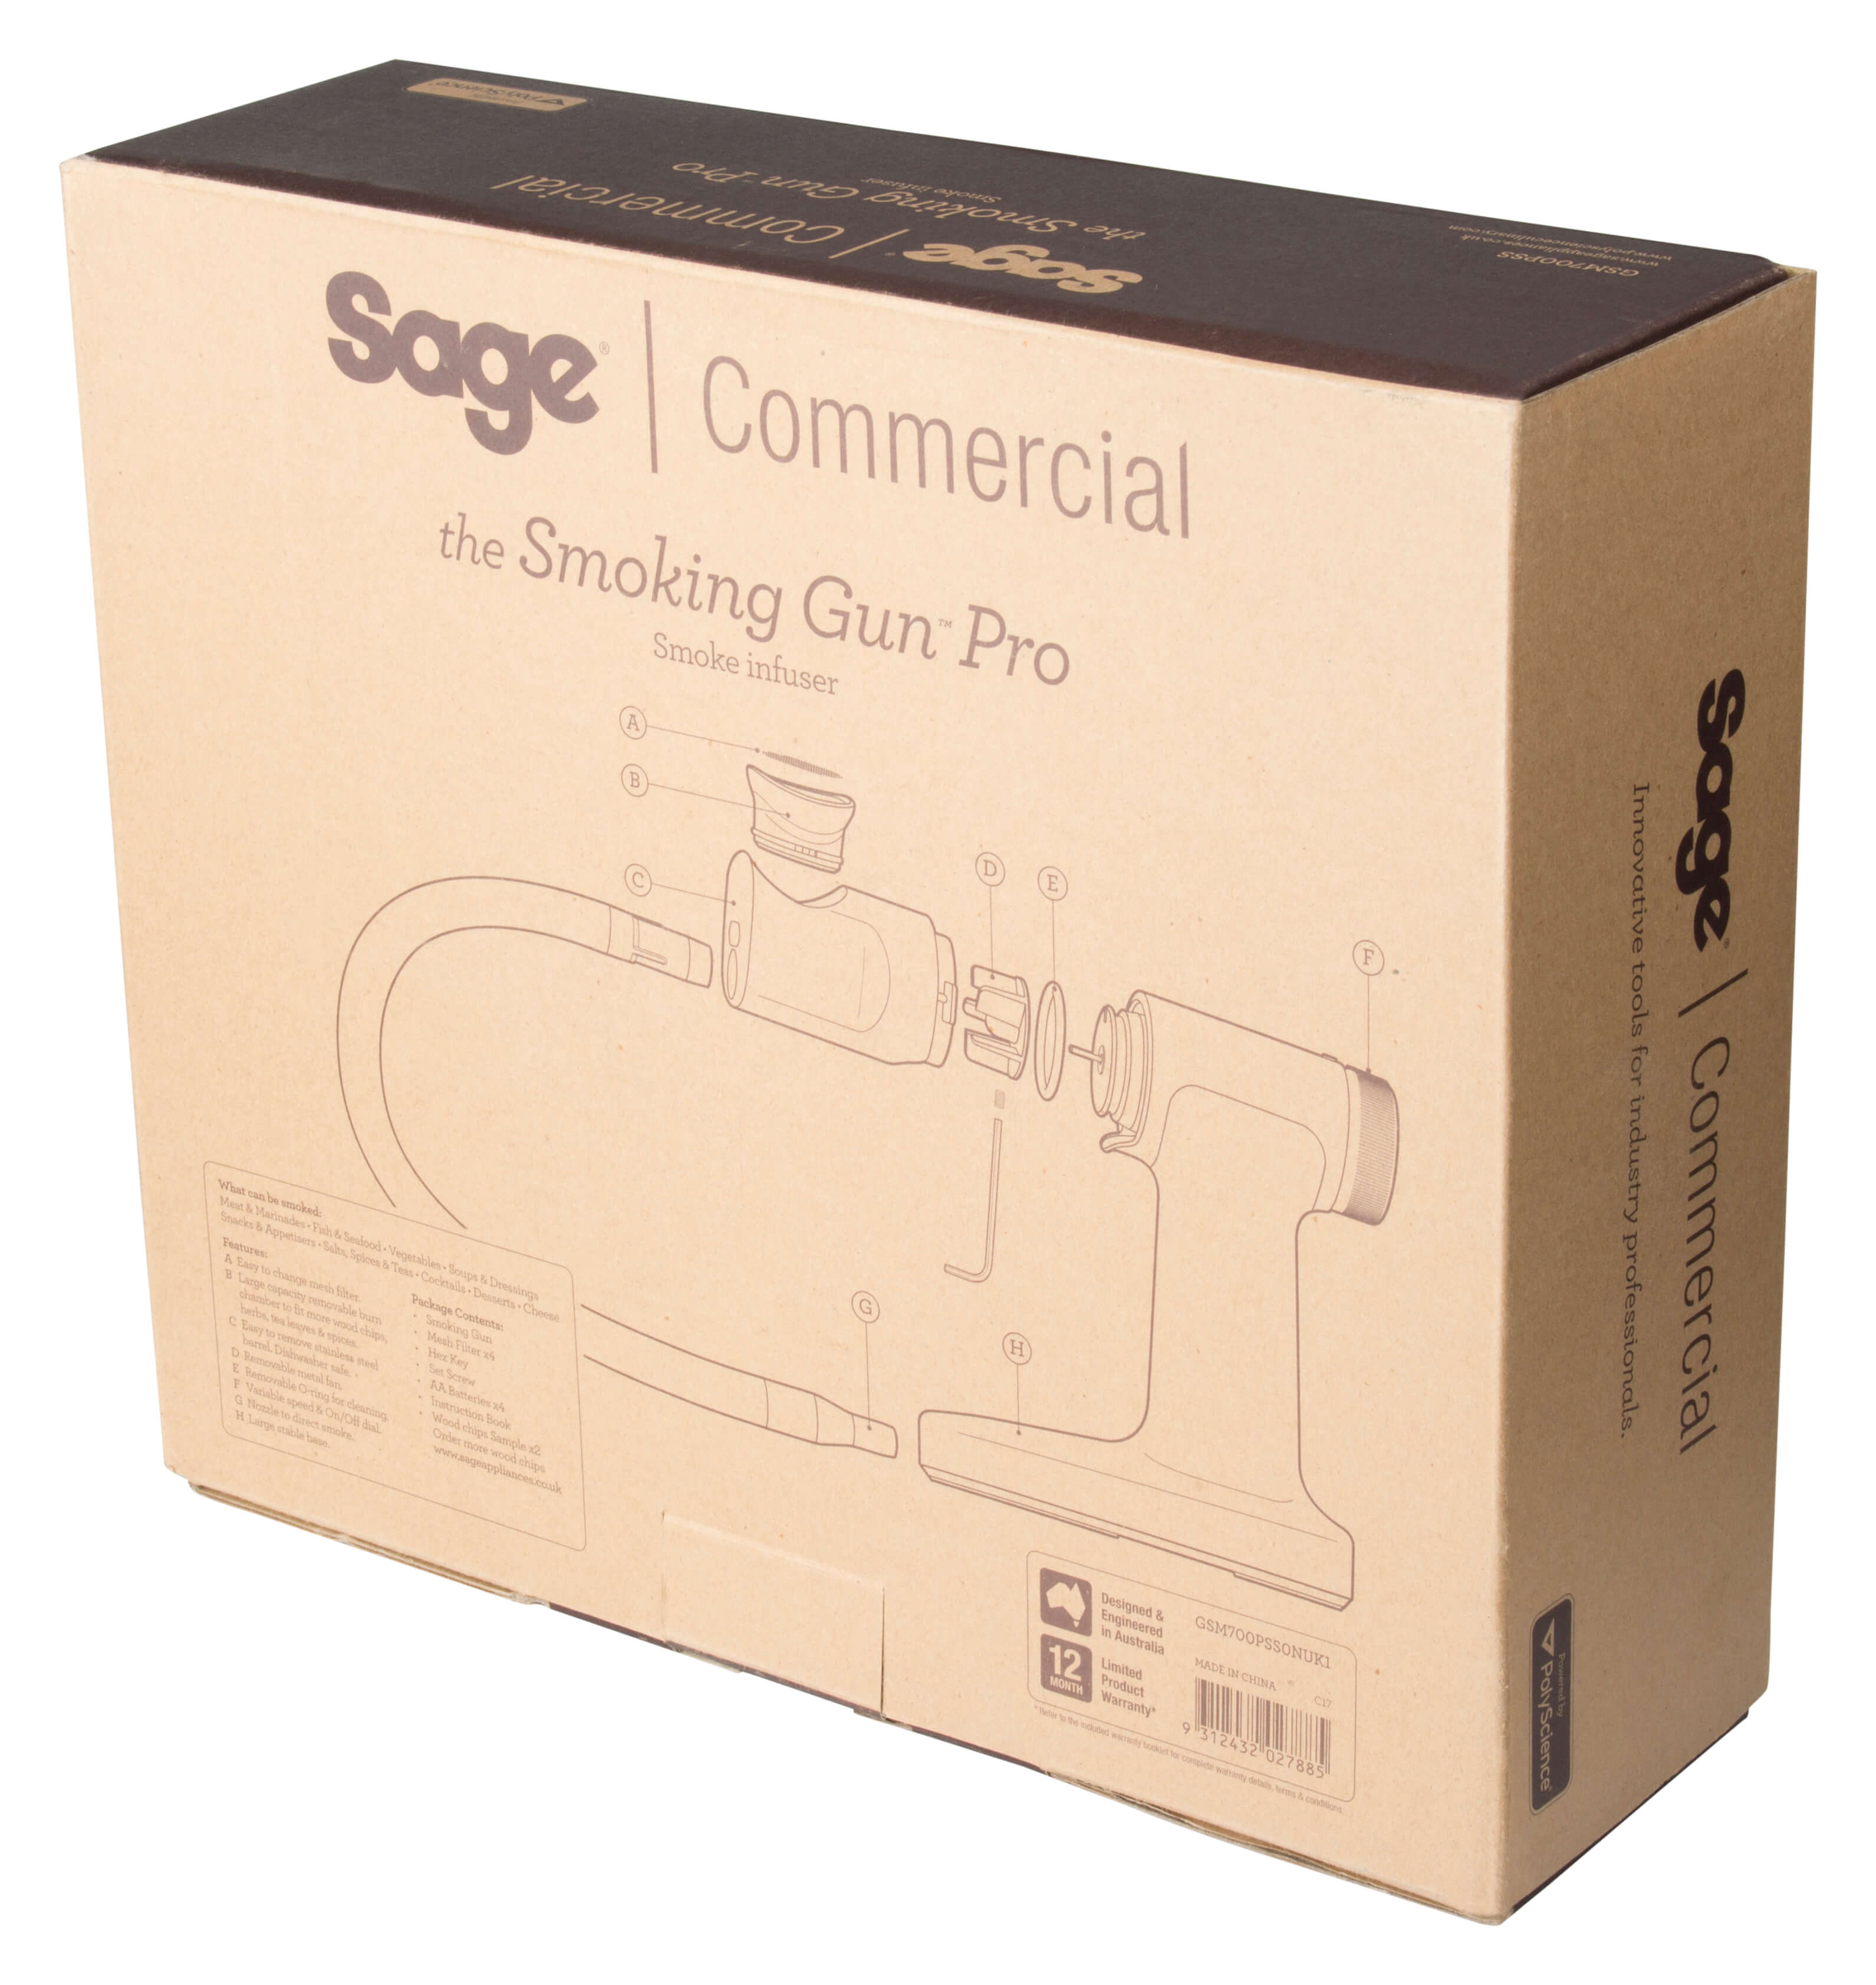 The Smoking Gun Pro™ - Sage Commercial